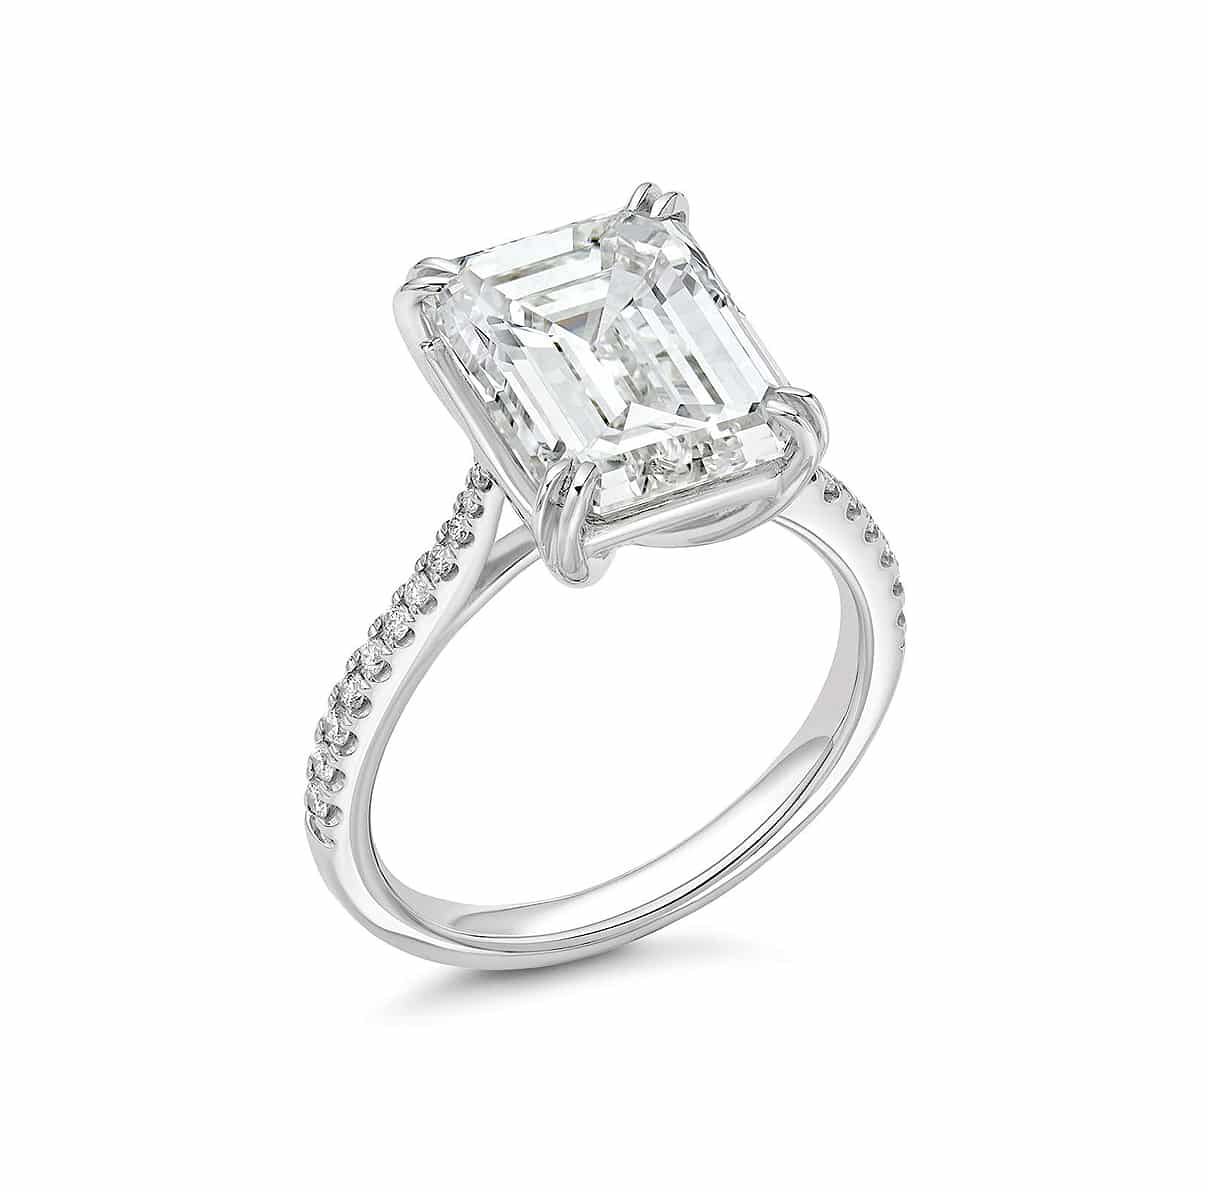 Emerald shaped diamond ring